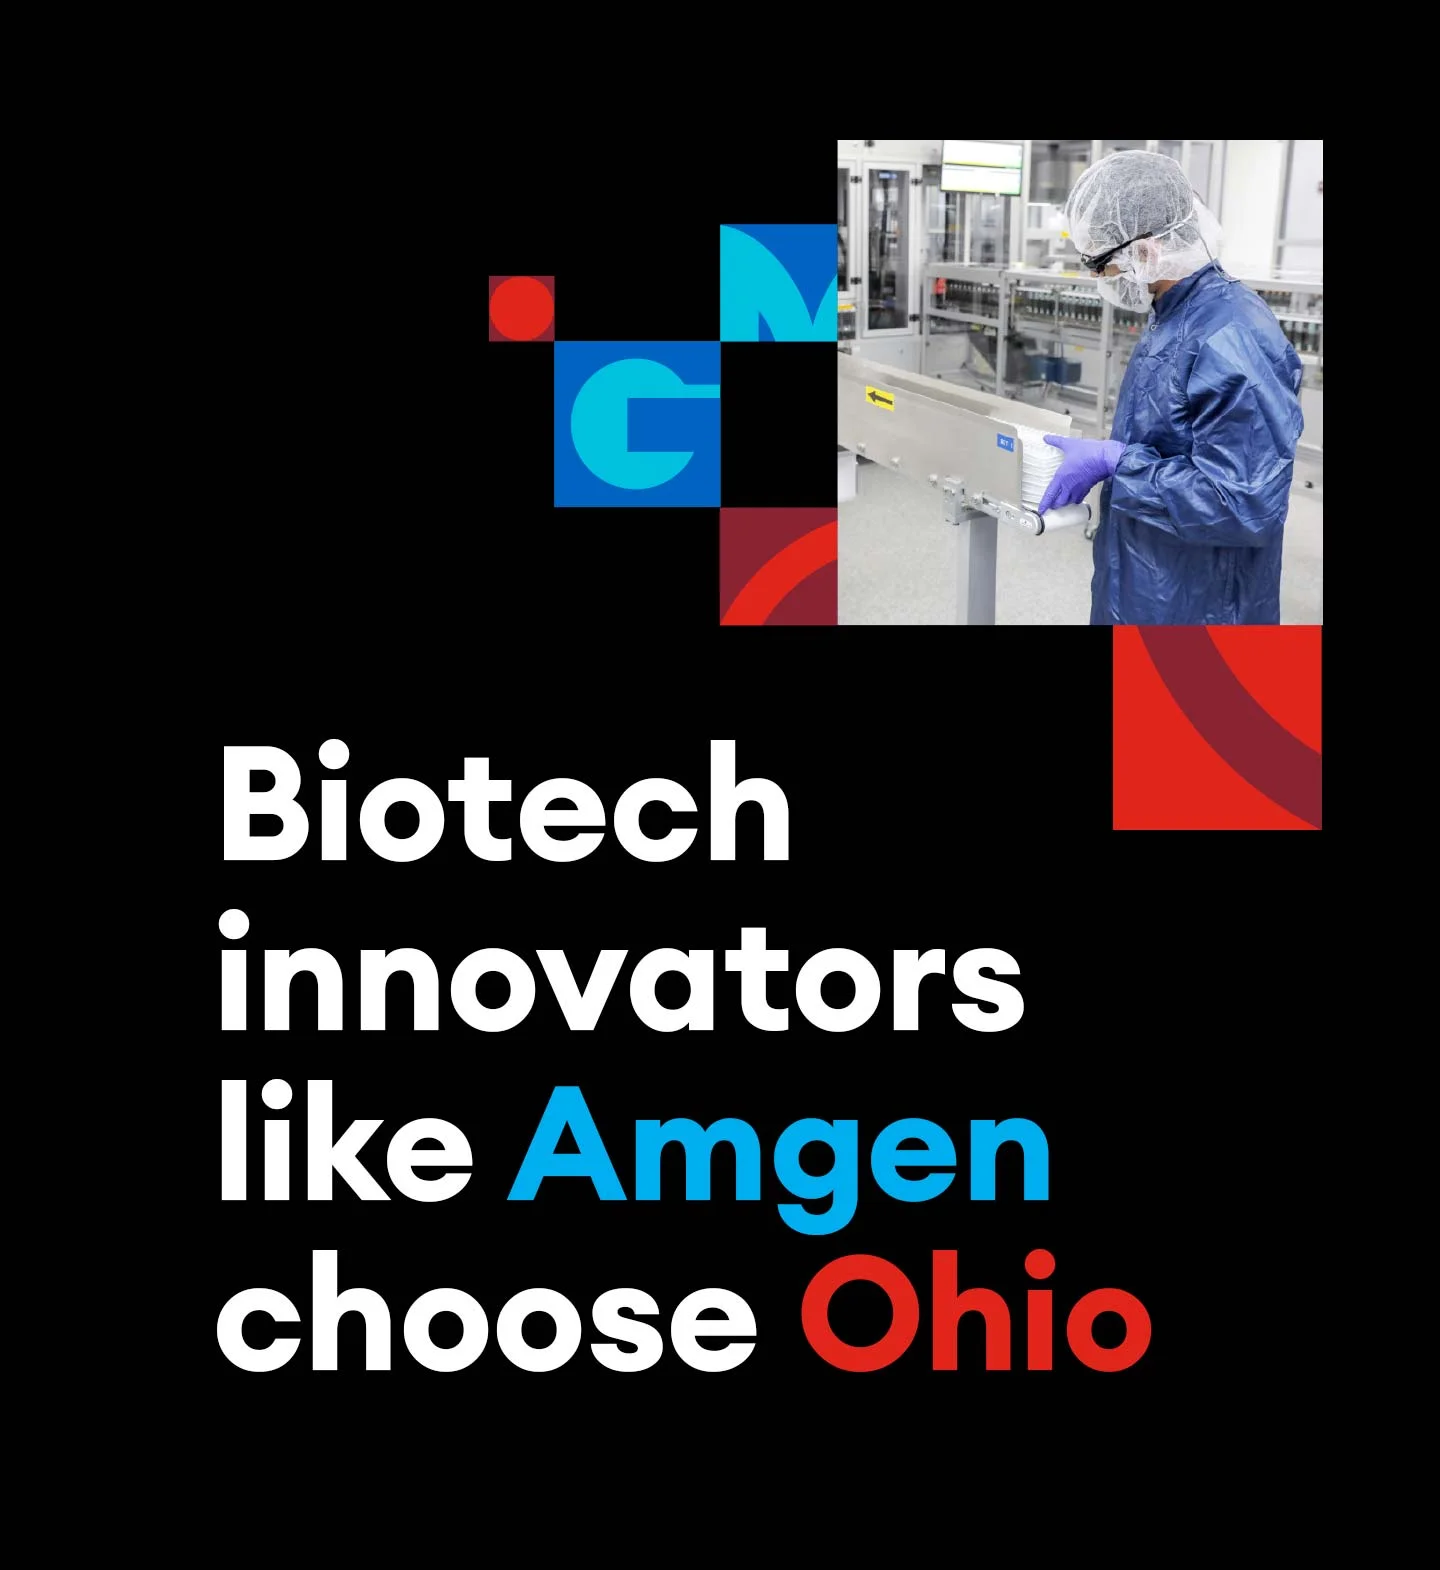 Biotech innovators like Amgen choose Ohio image